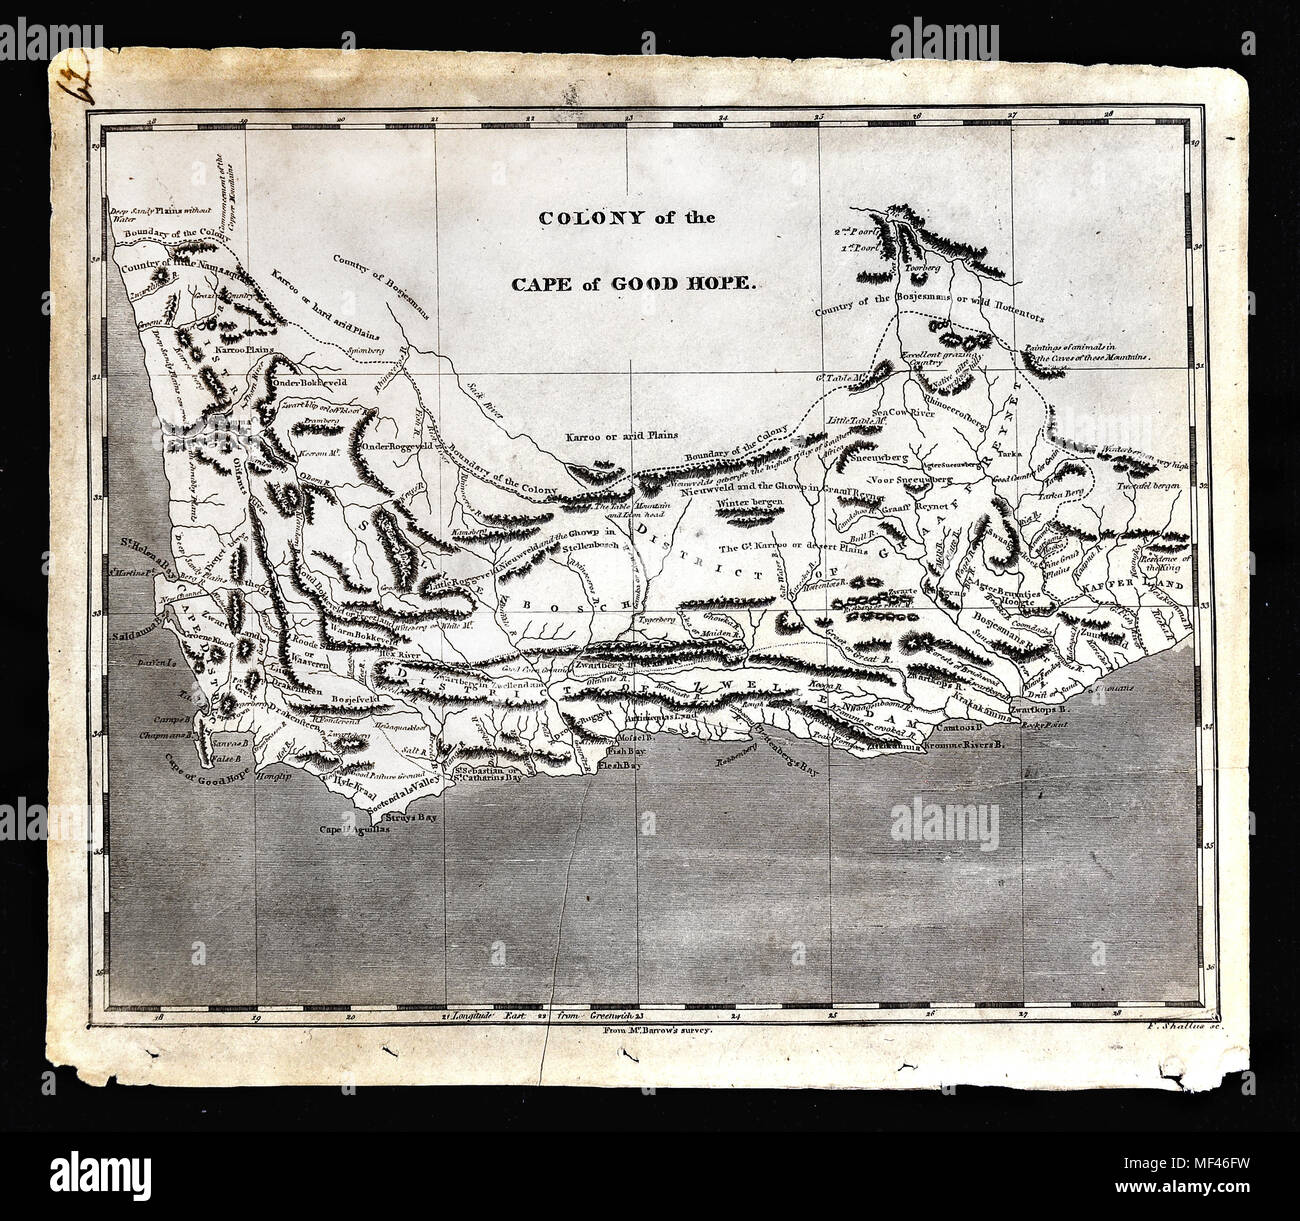 1804 Arrowsmith Map - South Africa - Cape of Good Hope Capetown Kalahari Desert Stock Photo